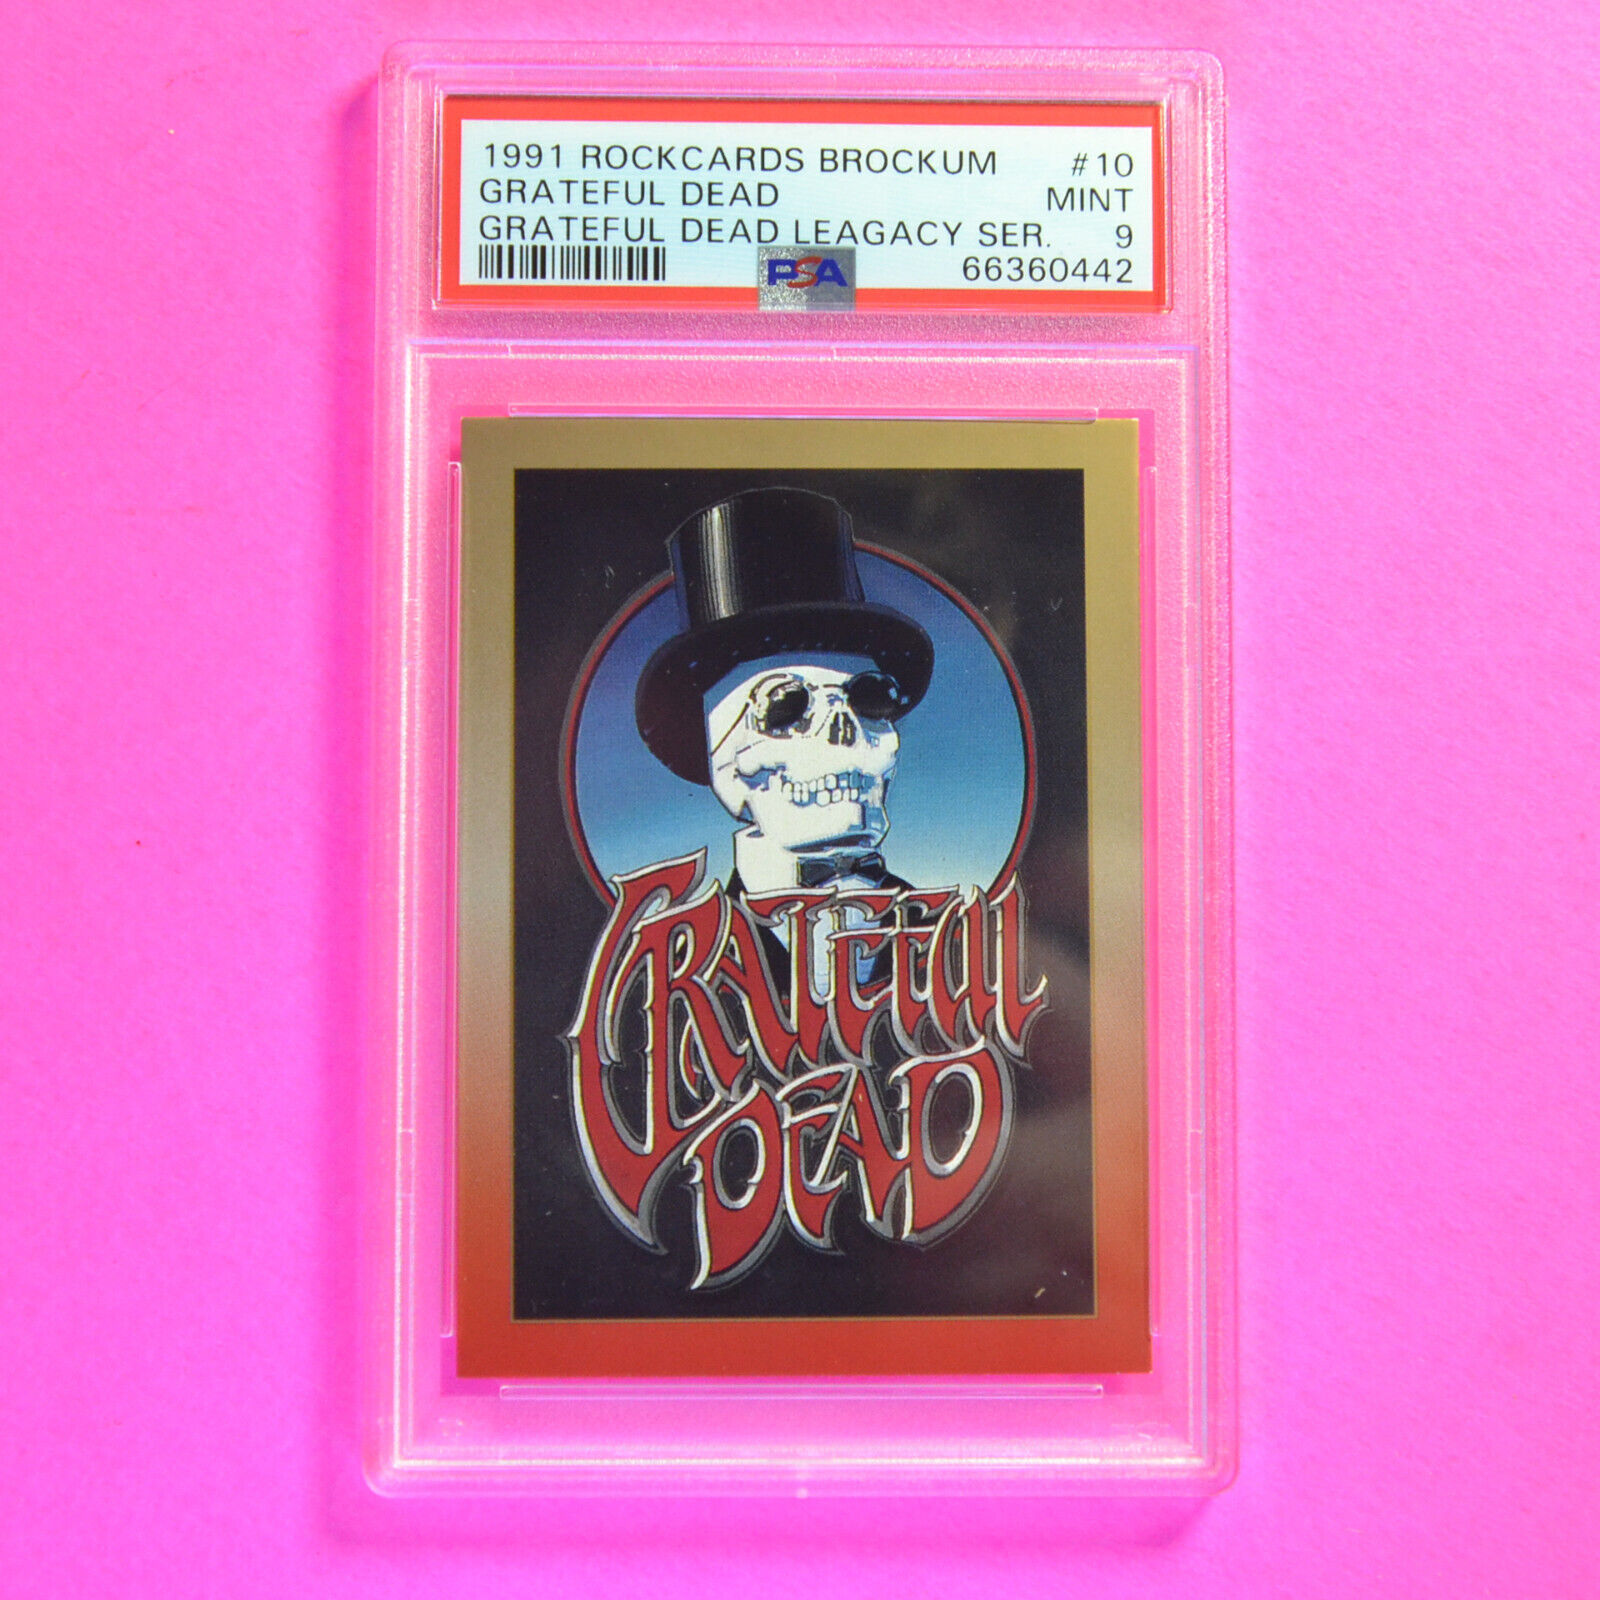 1991 RockCards Brockum Grateful Dead Legacy #10 Cover Card - PSA 9 Mint Rare